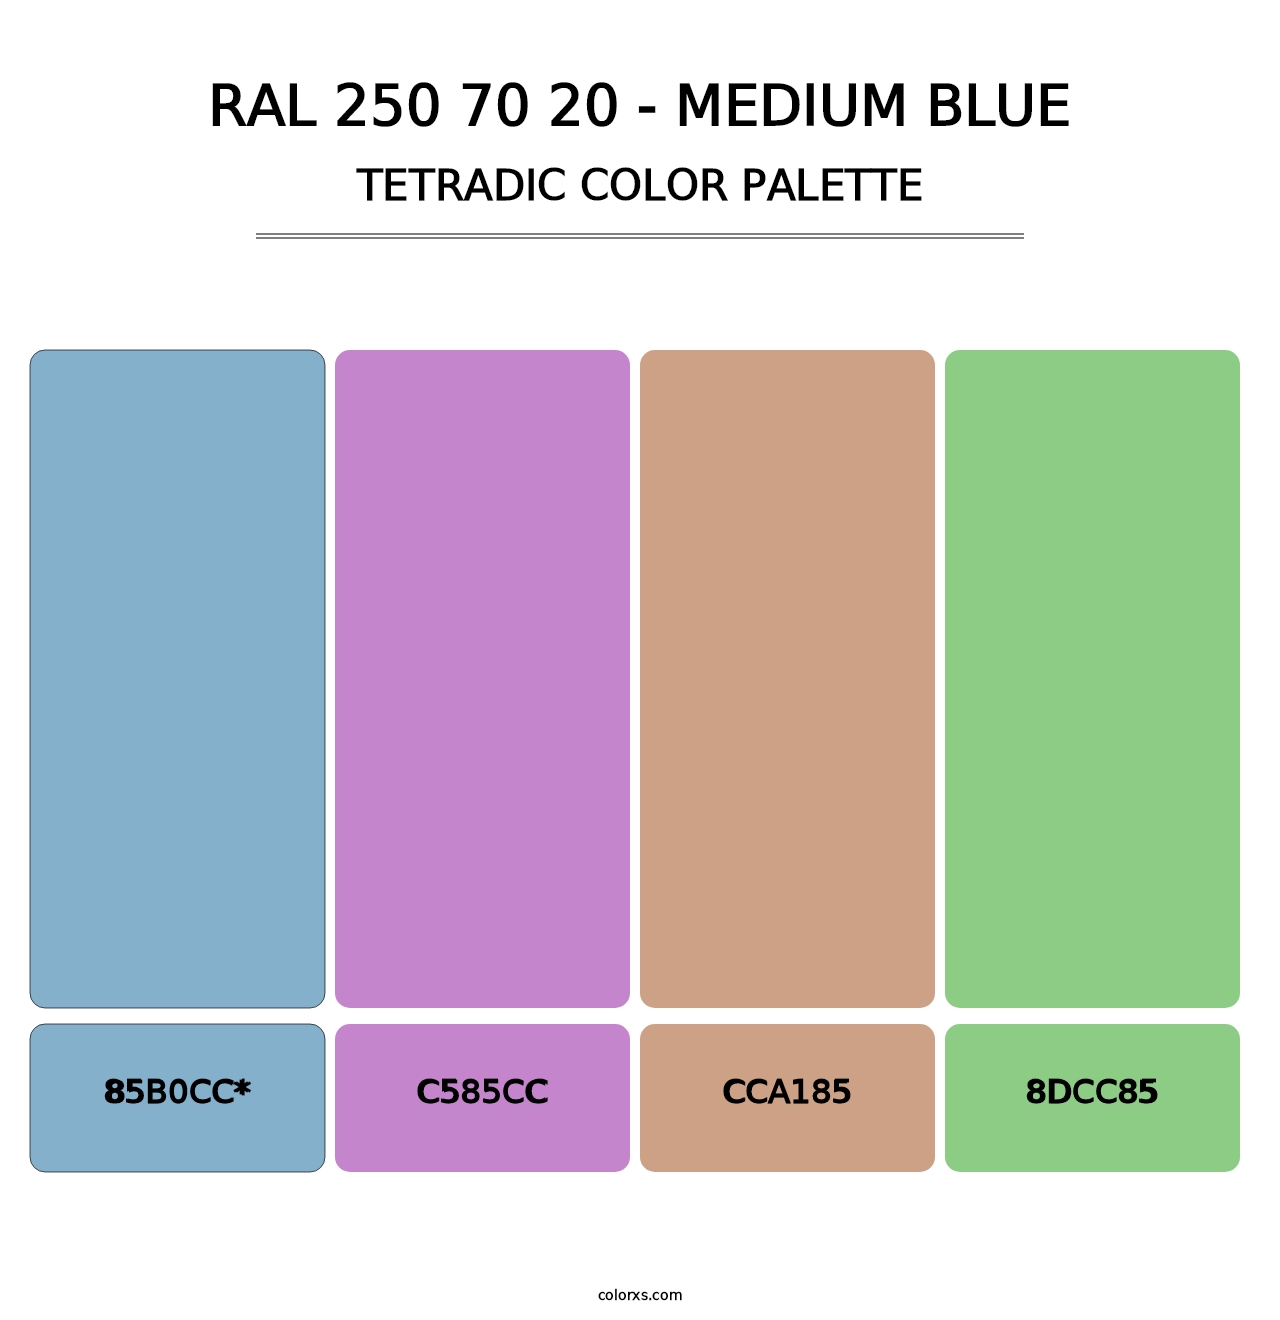 RAL 250 70 20 - Medium Blue - Tetradic Color Palette